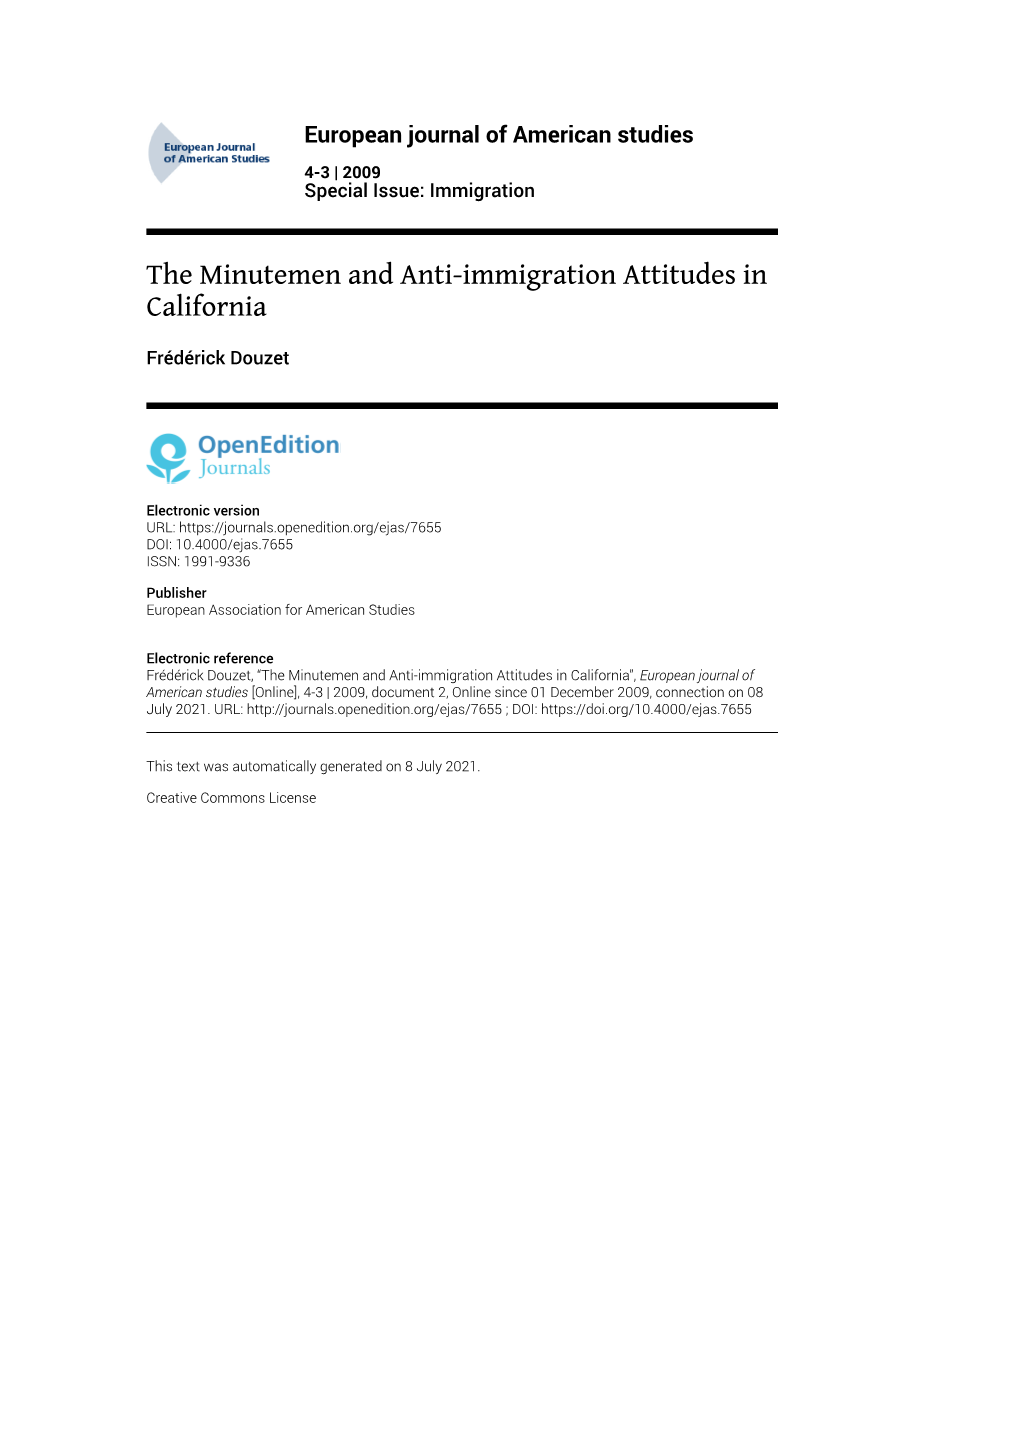 European Journal of American Studies, 4-3 | 2009 the Minutemen and Anti-Immigration Attitudes in California 2